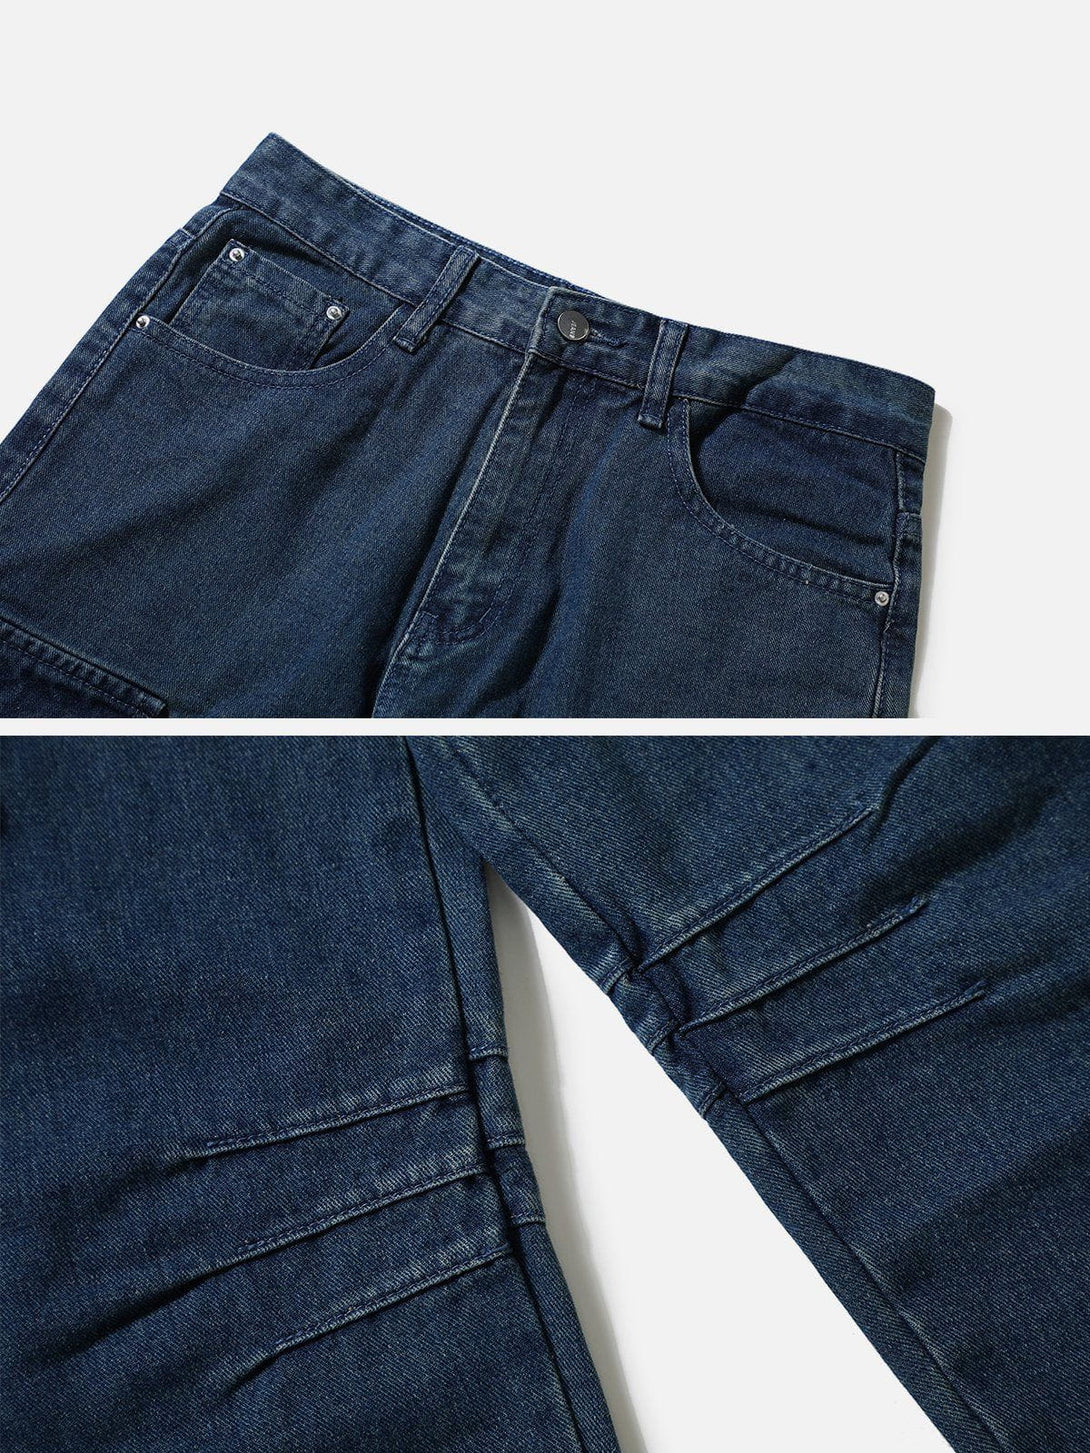 AlanBalen® - Big Pocket Ruched Jeans AlanBalen